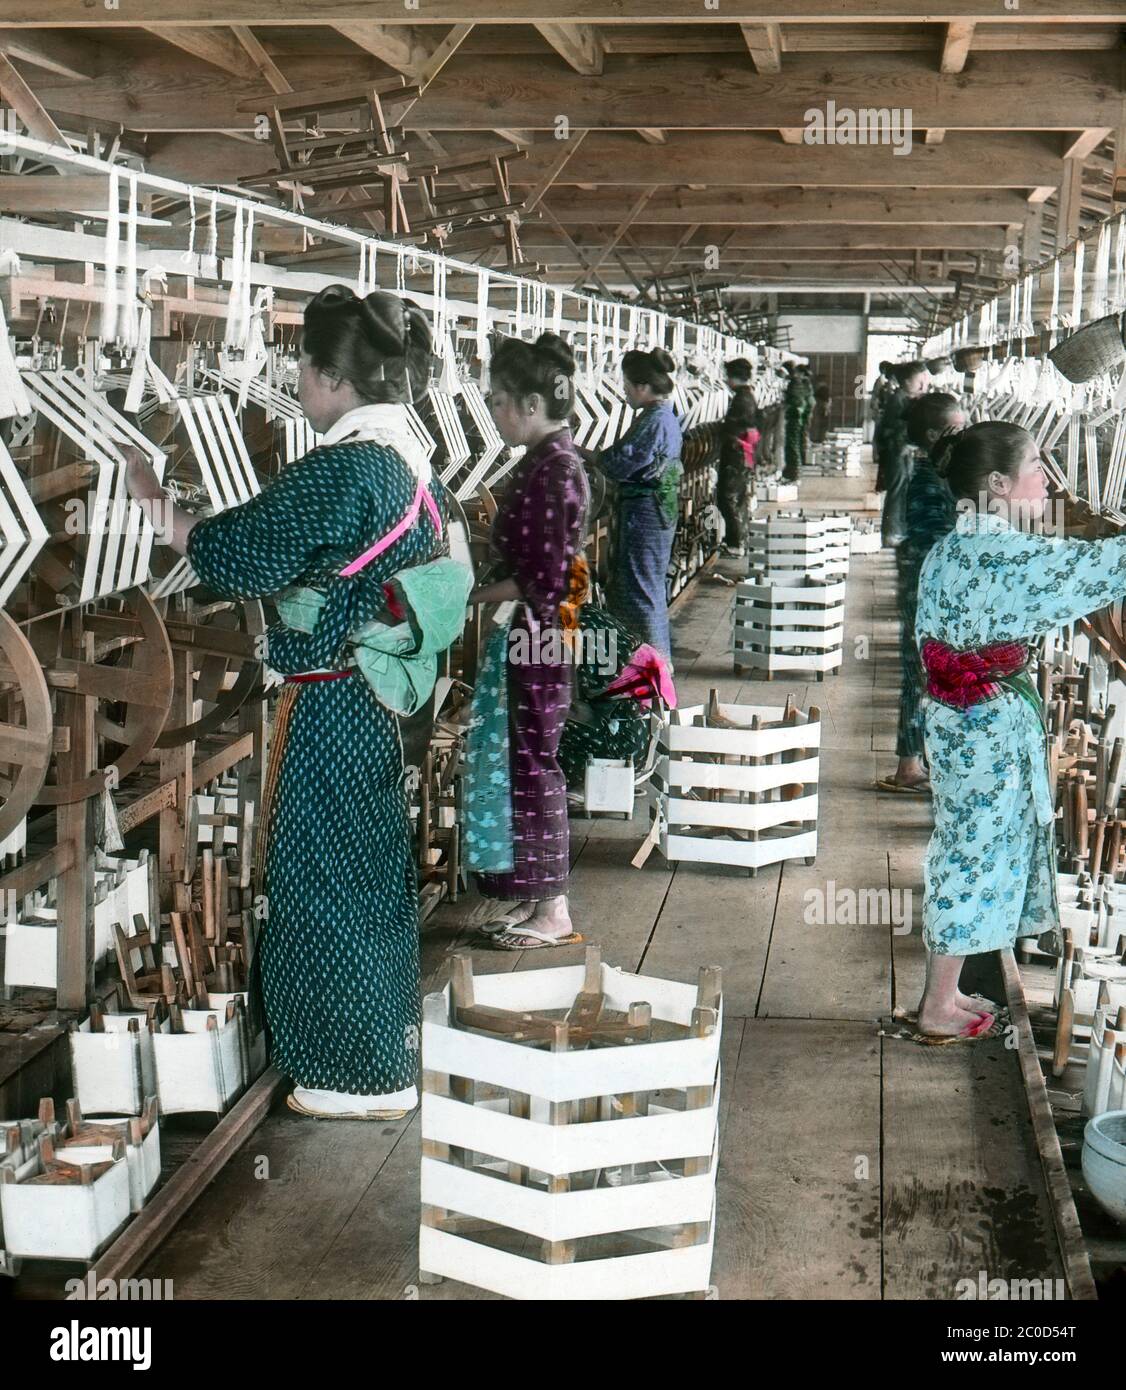 [ 1900s Japan - Japanese Women and Girls Reeling Silk ] — Japanese women and girls reeling silk at a silk factory in Maebashi (前橋市), Gunma Prefecture.  20th century vintage glass slide. Stock Photo